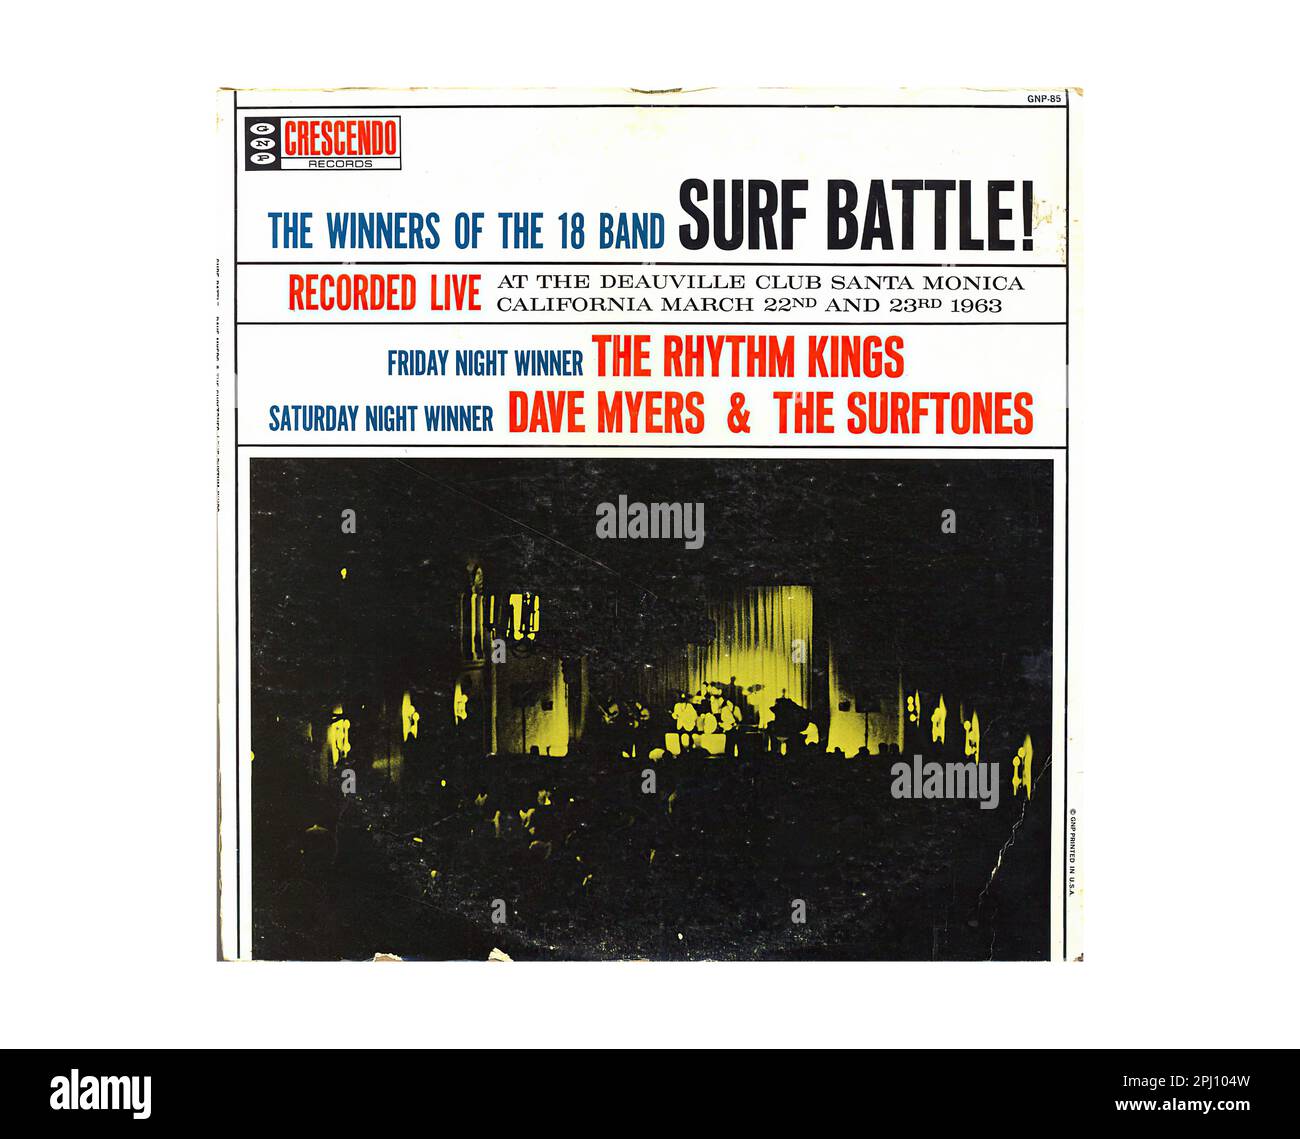 Rhythm Kings - Dave Myers & The Surftones - Battaglia di Surf! - Vintage Surf Music Vinyl Record L.P. Foto Stock